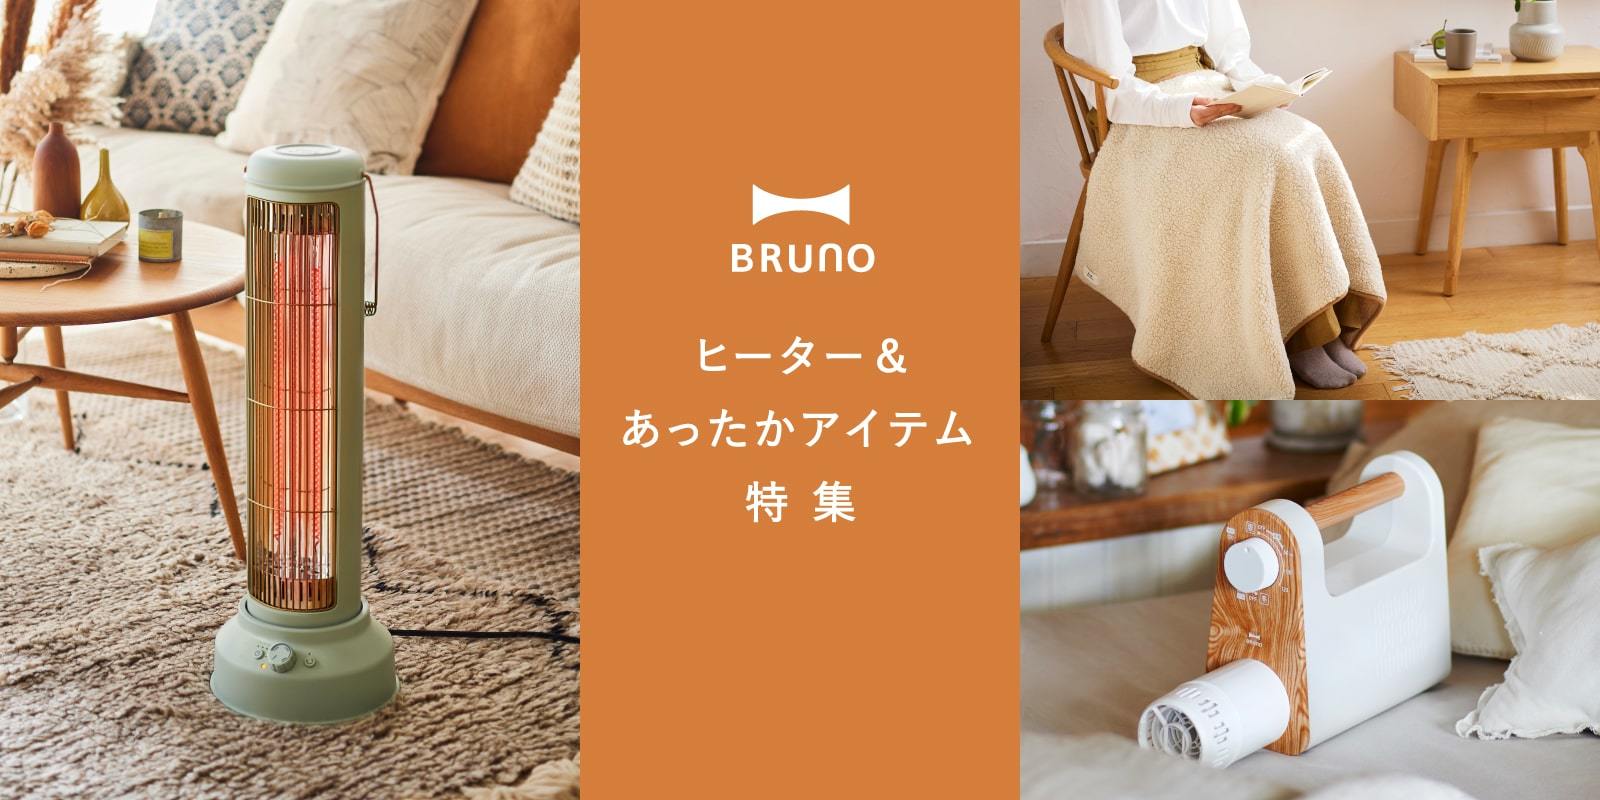 BRUNO 機能別加湿器特集の通販 | BRUNO online